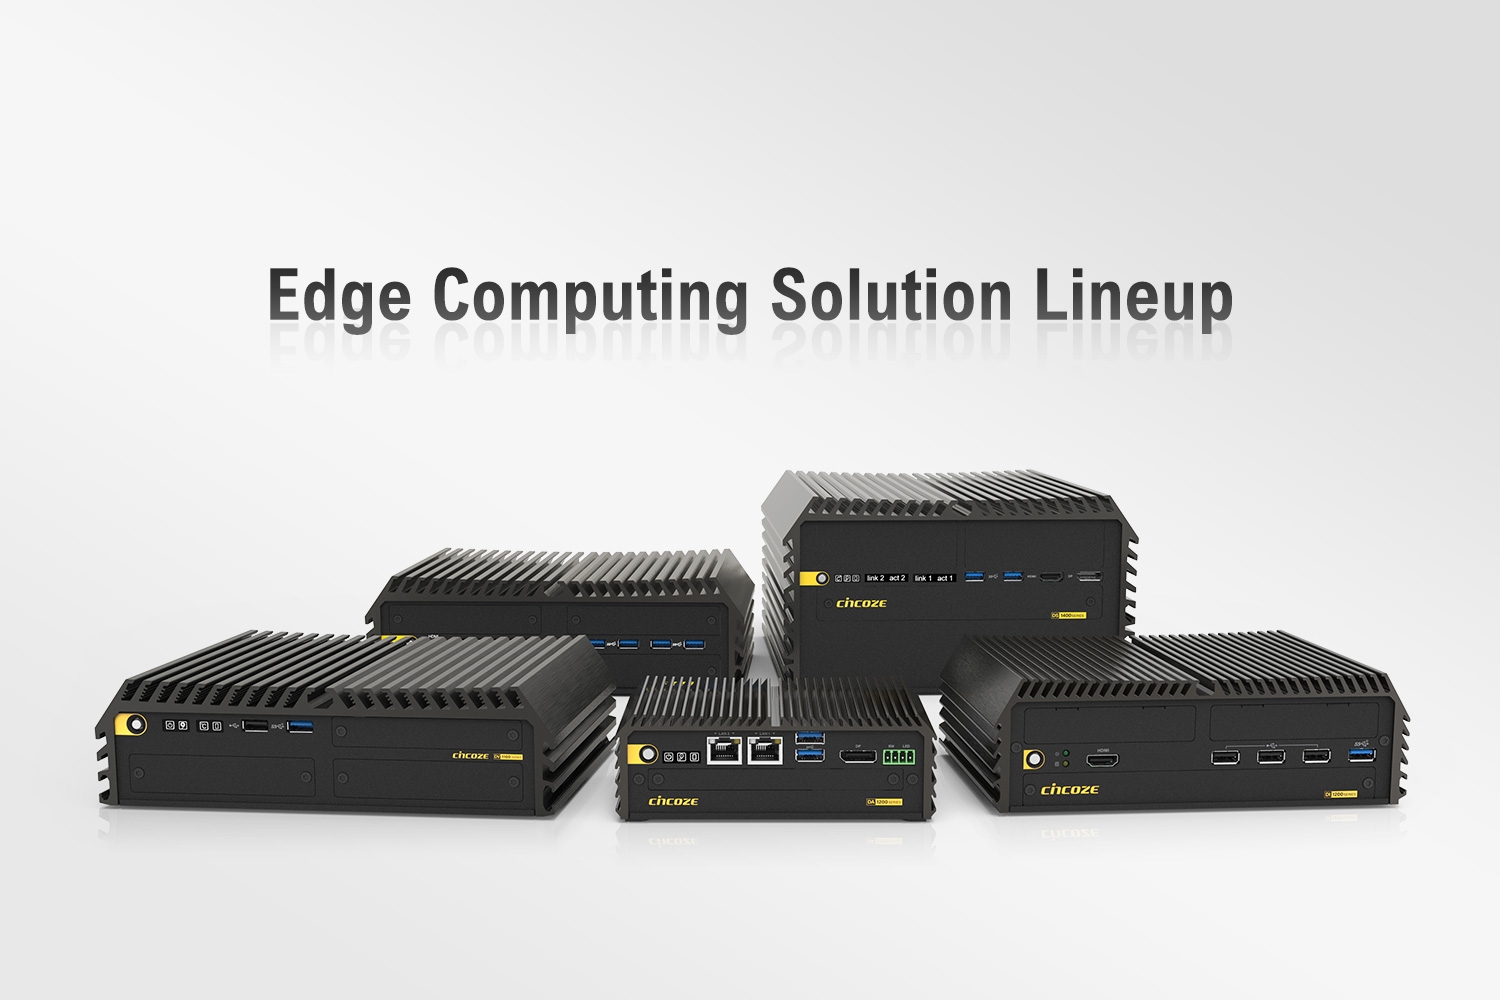 [ Product Spotlight ] Cincoze Edge Computing Solution Lineup